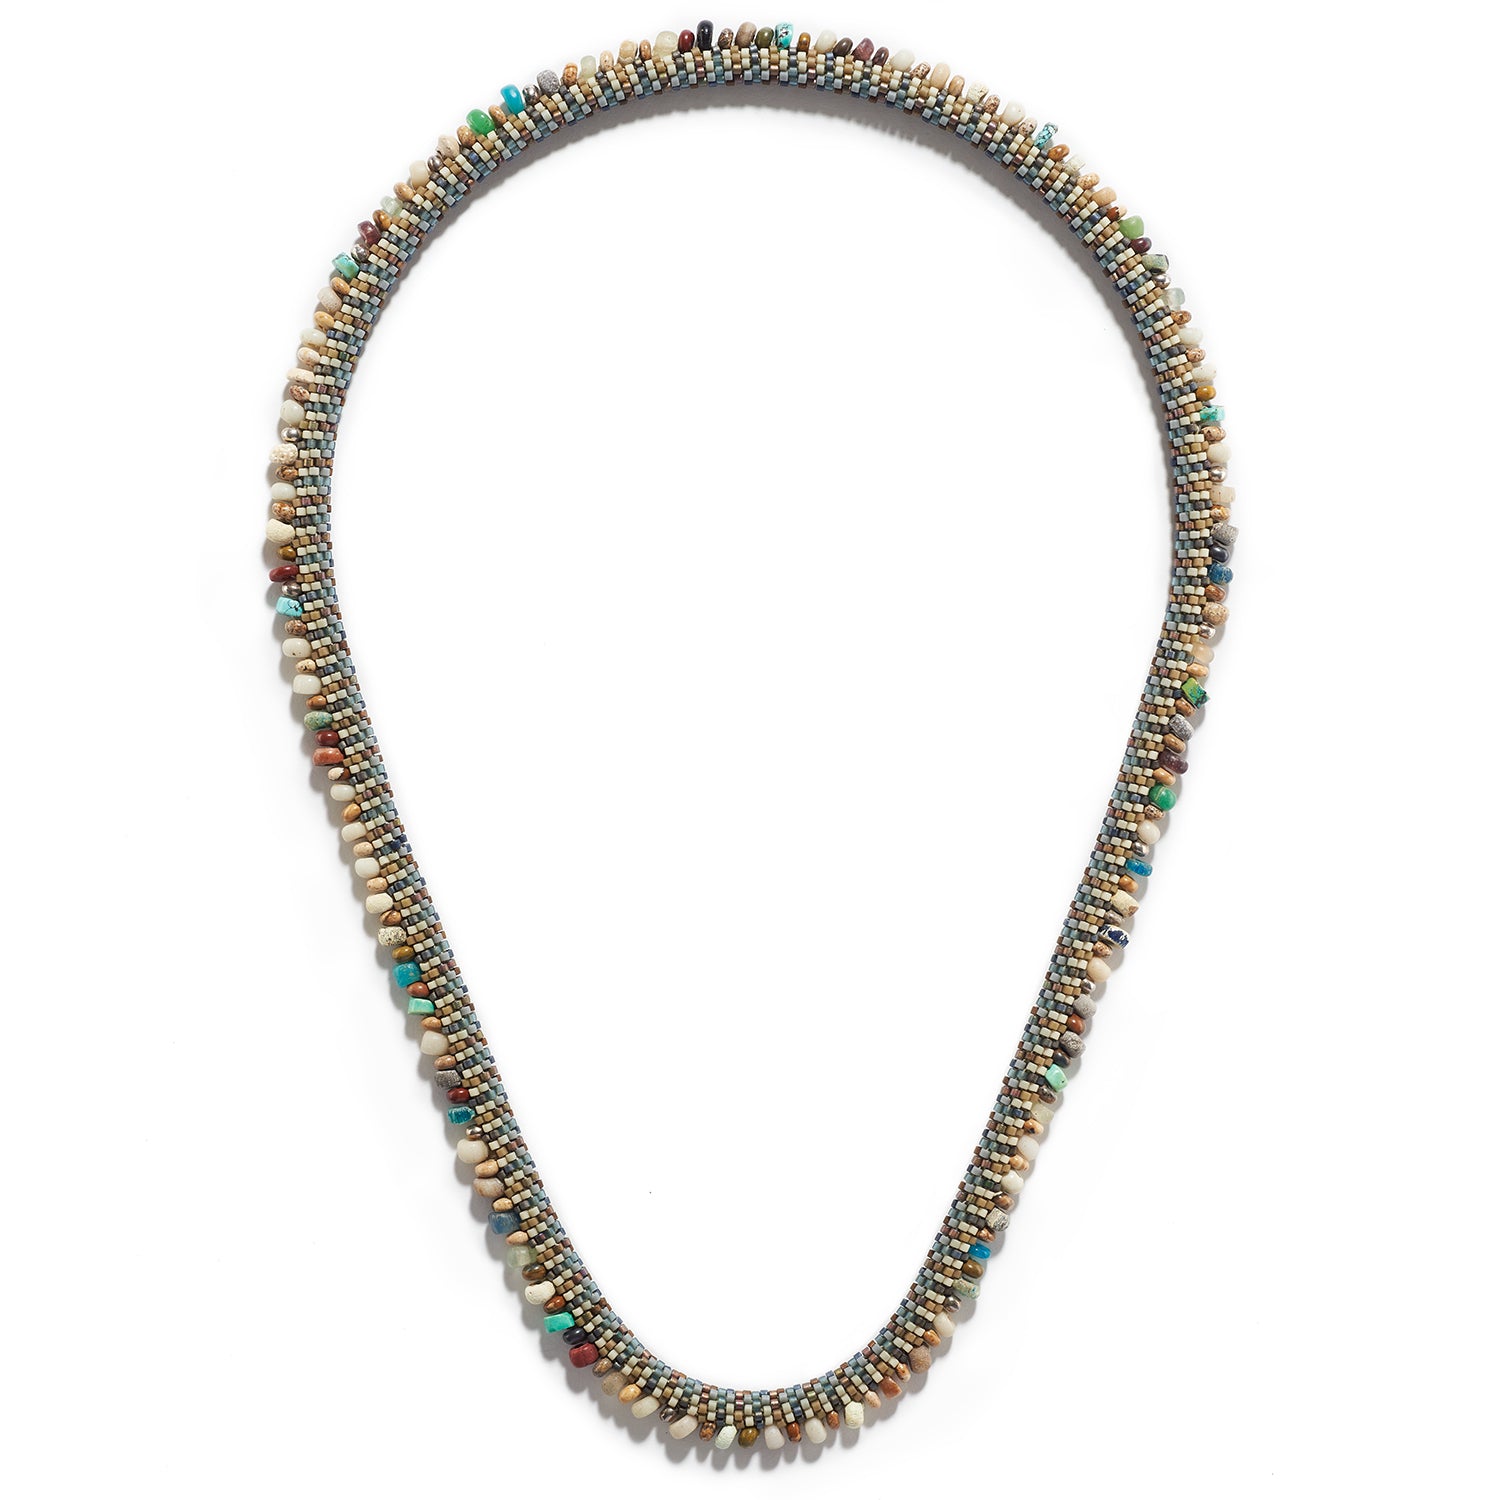 Medieval Beads Necklace/Bracelet